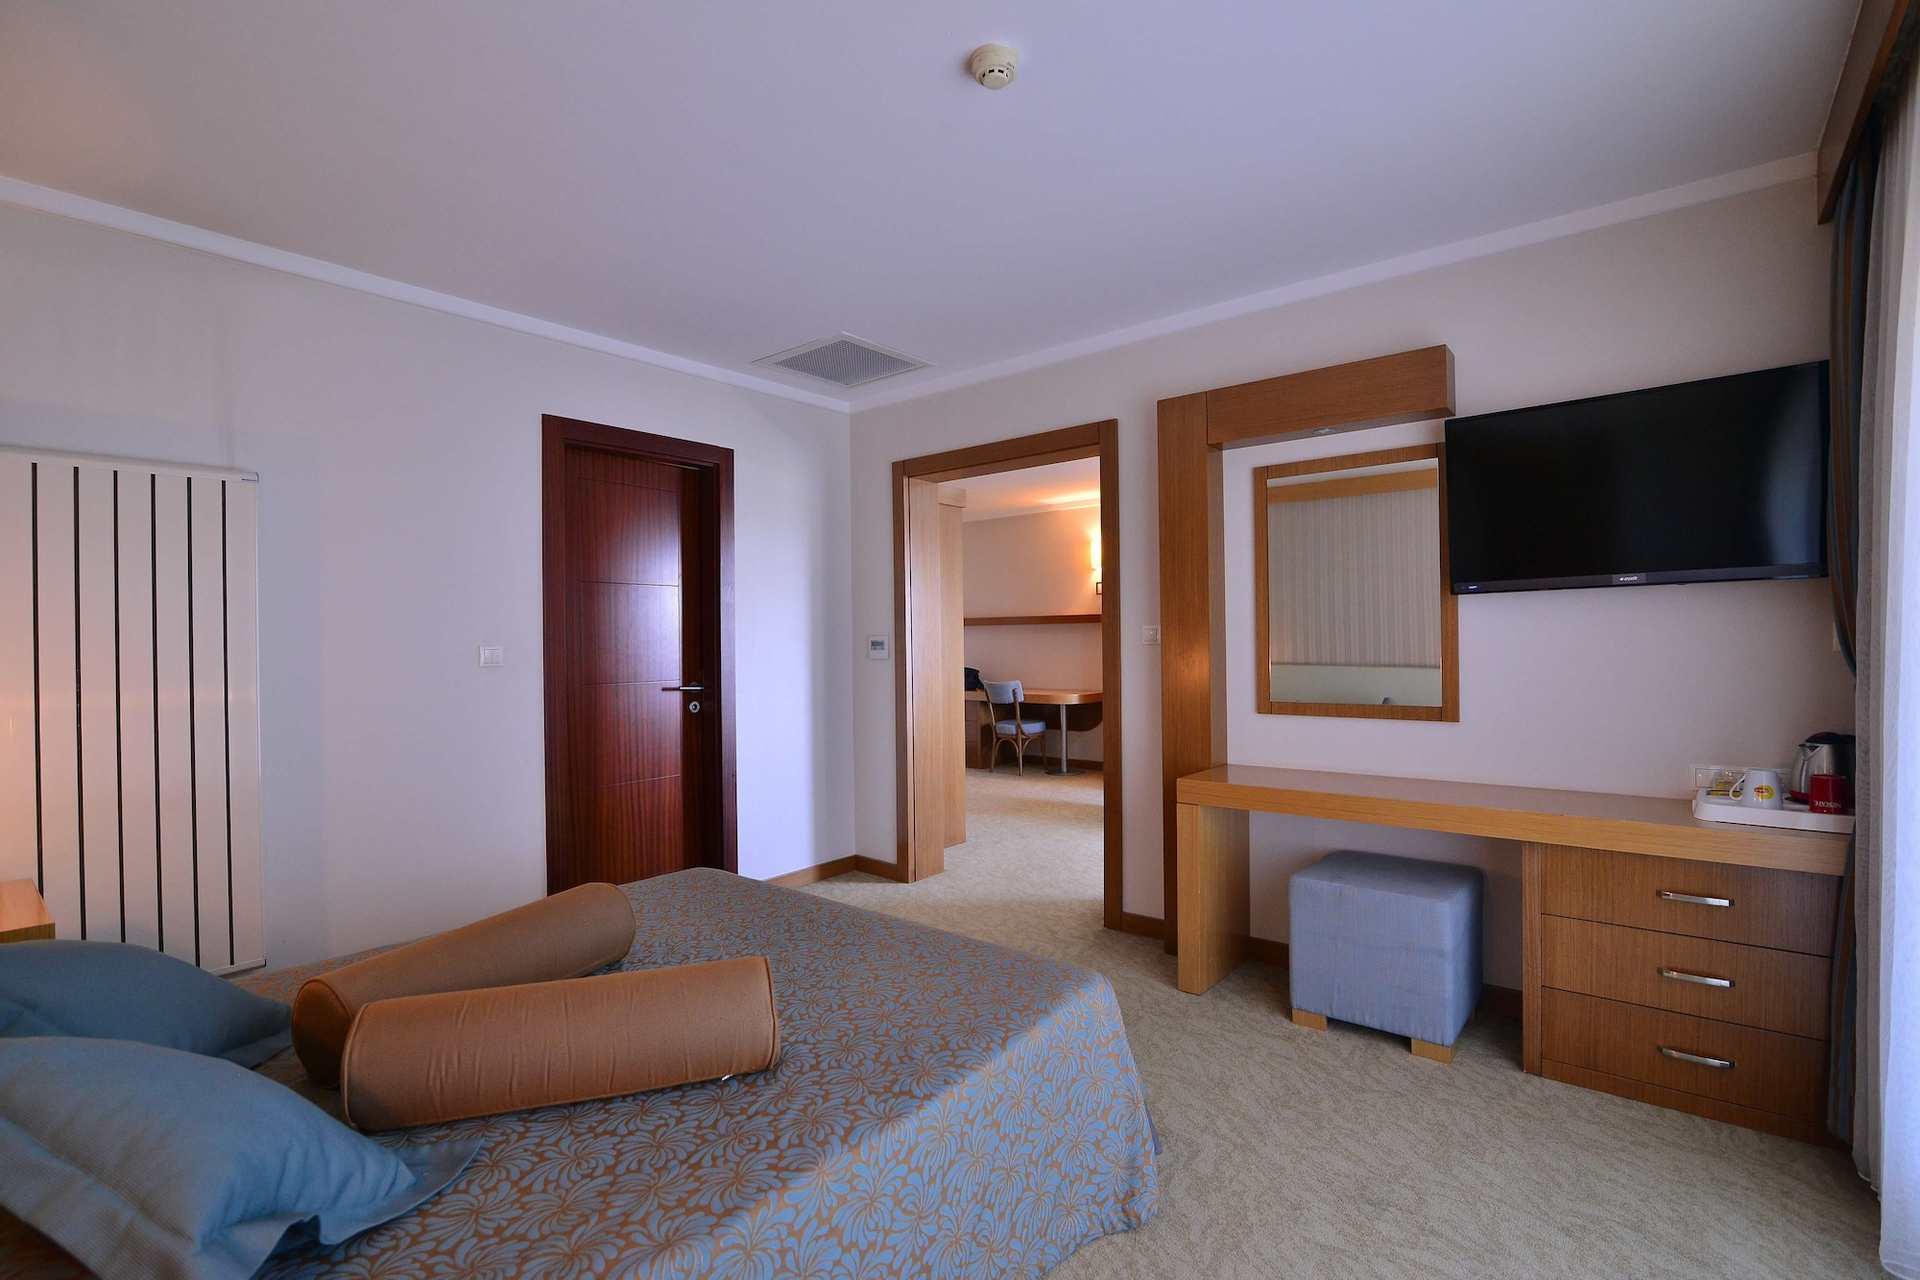 Bedroom 2, Buyuk Anadolu Eregli Hotel, Ereğli